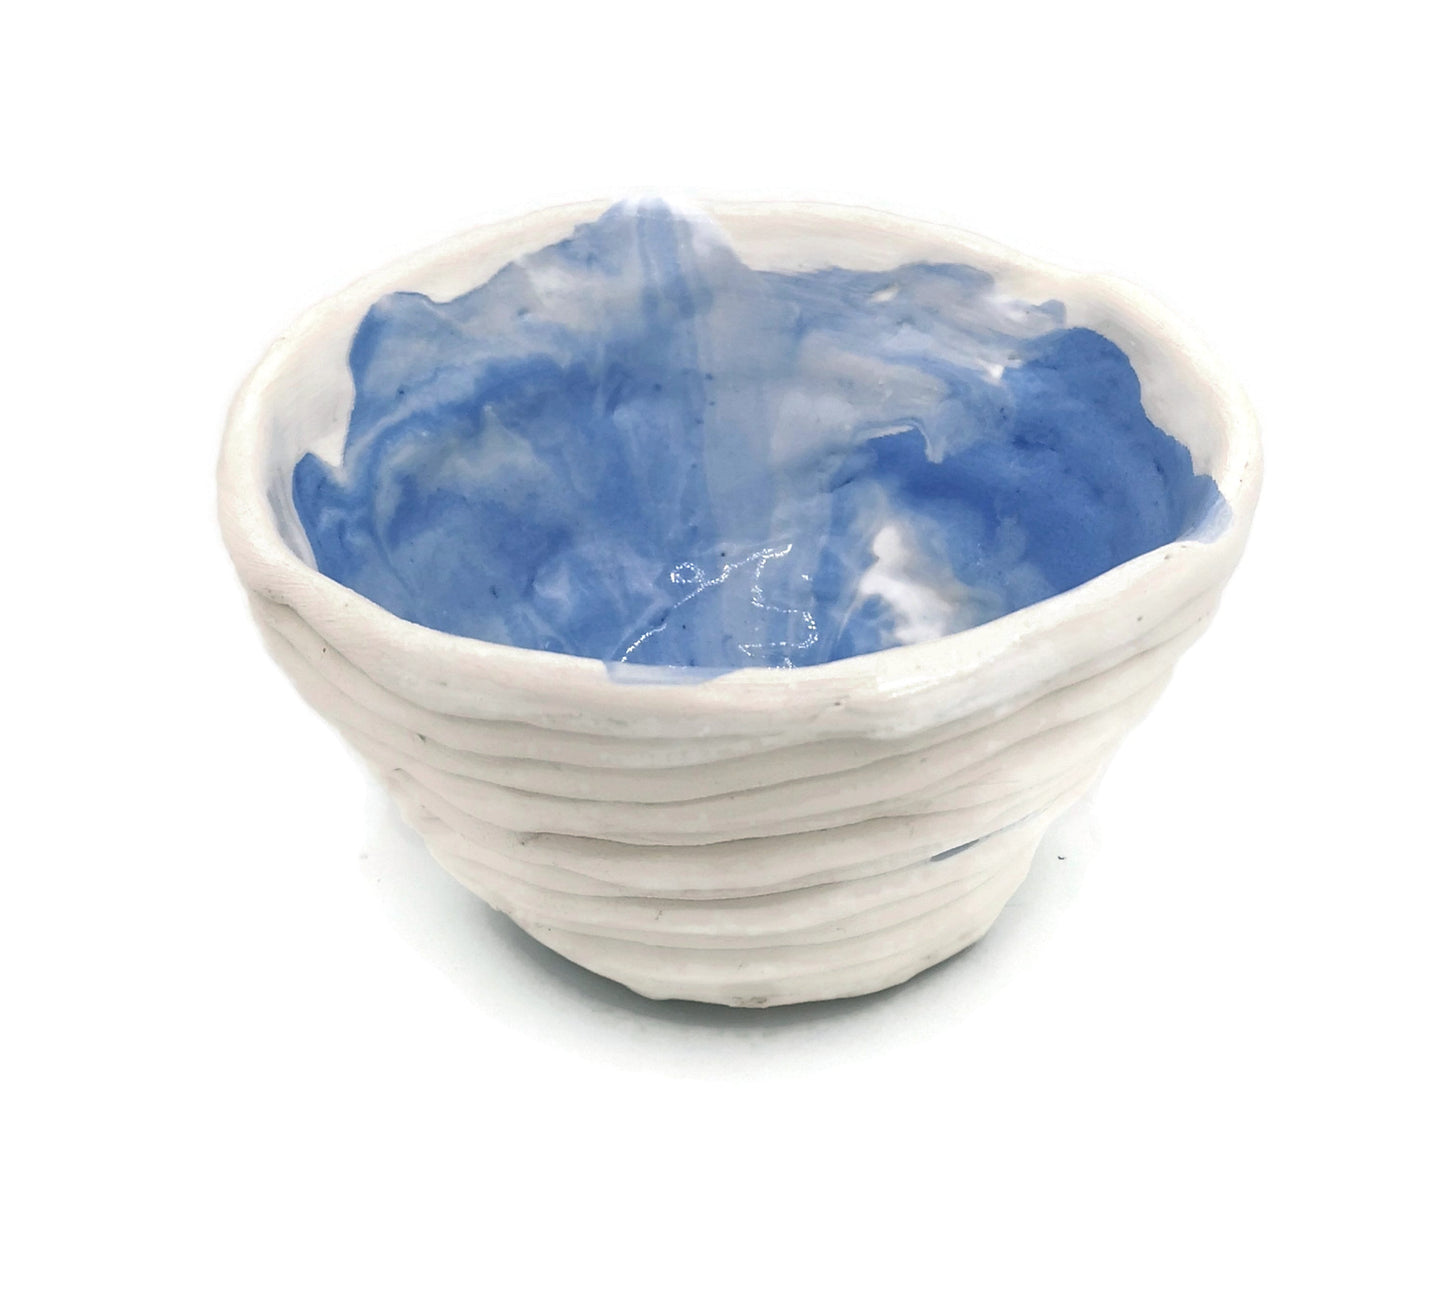 Handmade Ceramic Blue and White Bowl For Home Decor, Small Pottery Snack Bowls, Textured Irregular Shape Candle Holder, Trinket Bowl - Ceramica Ana Rafael